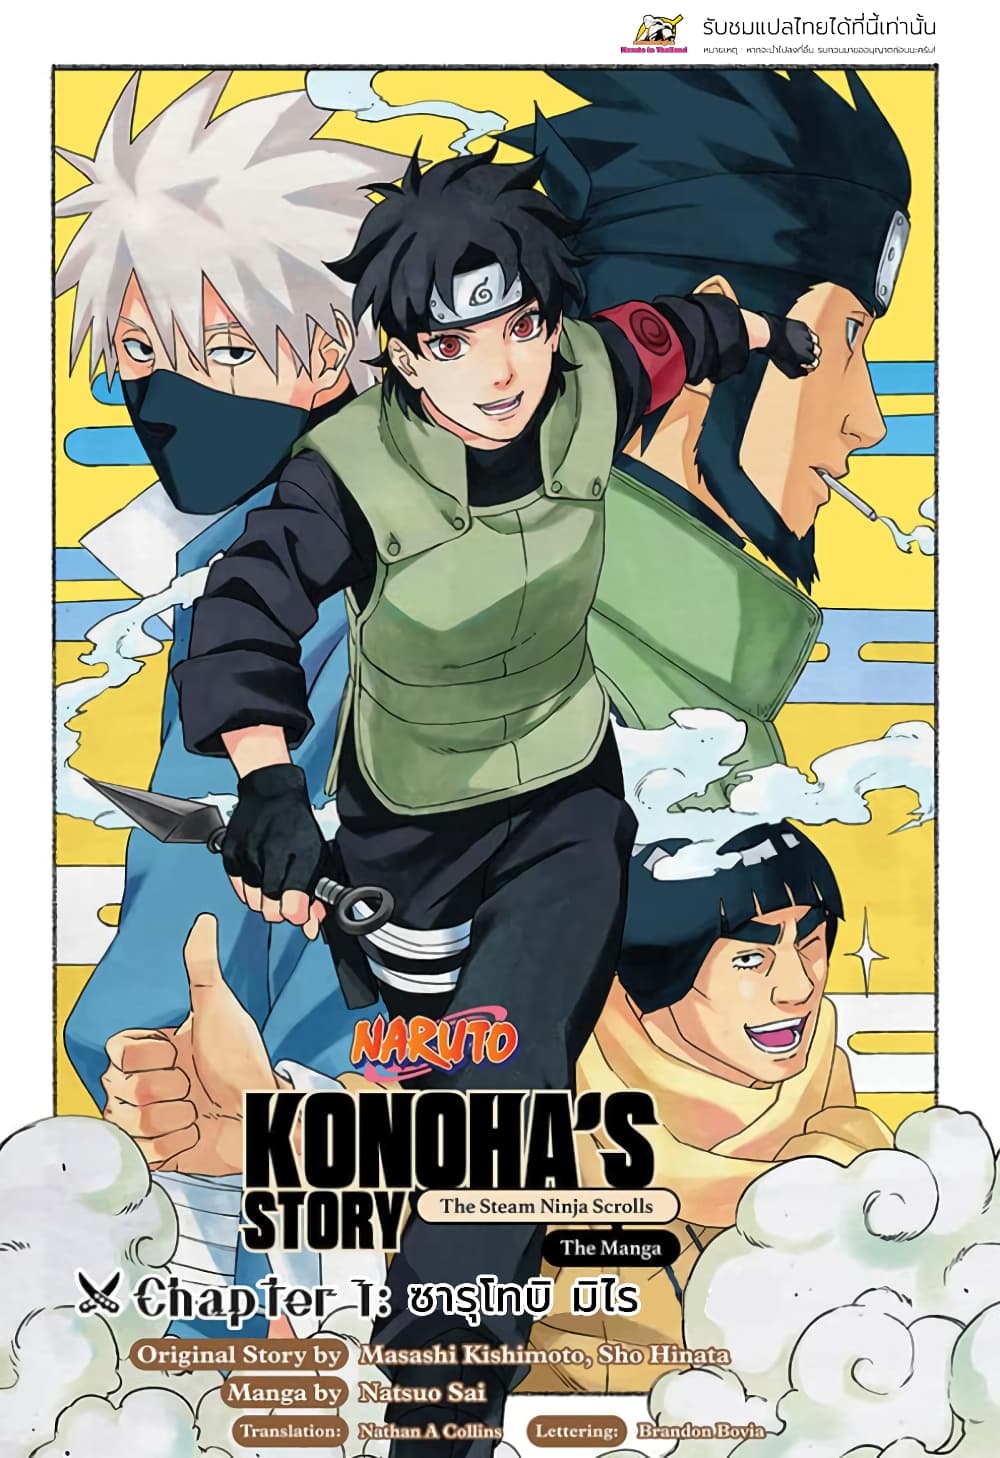 Naruto Konoha’s Story – The Steam Ninja Scrolls The Manga ตอนที่ 1 (2)